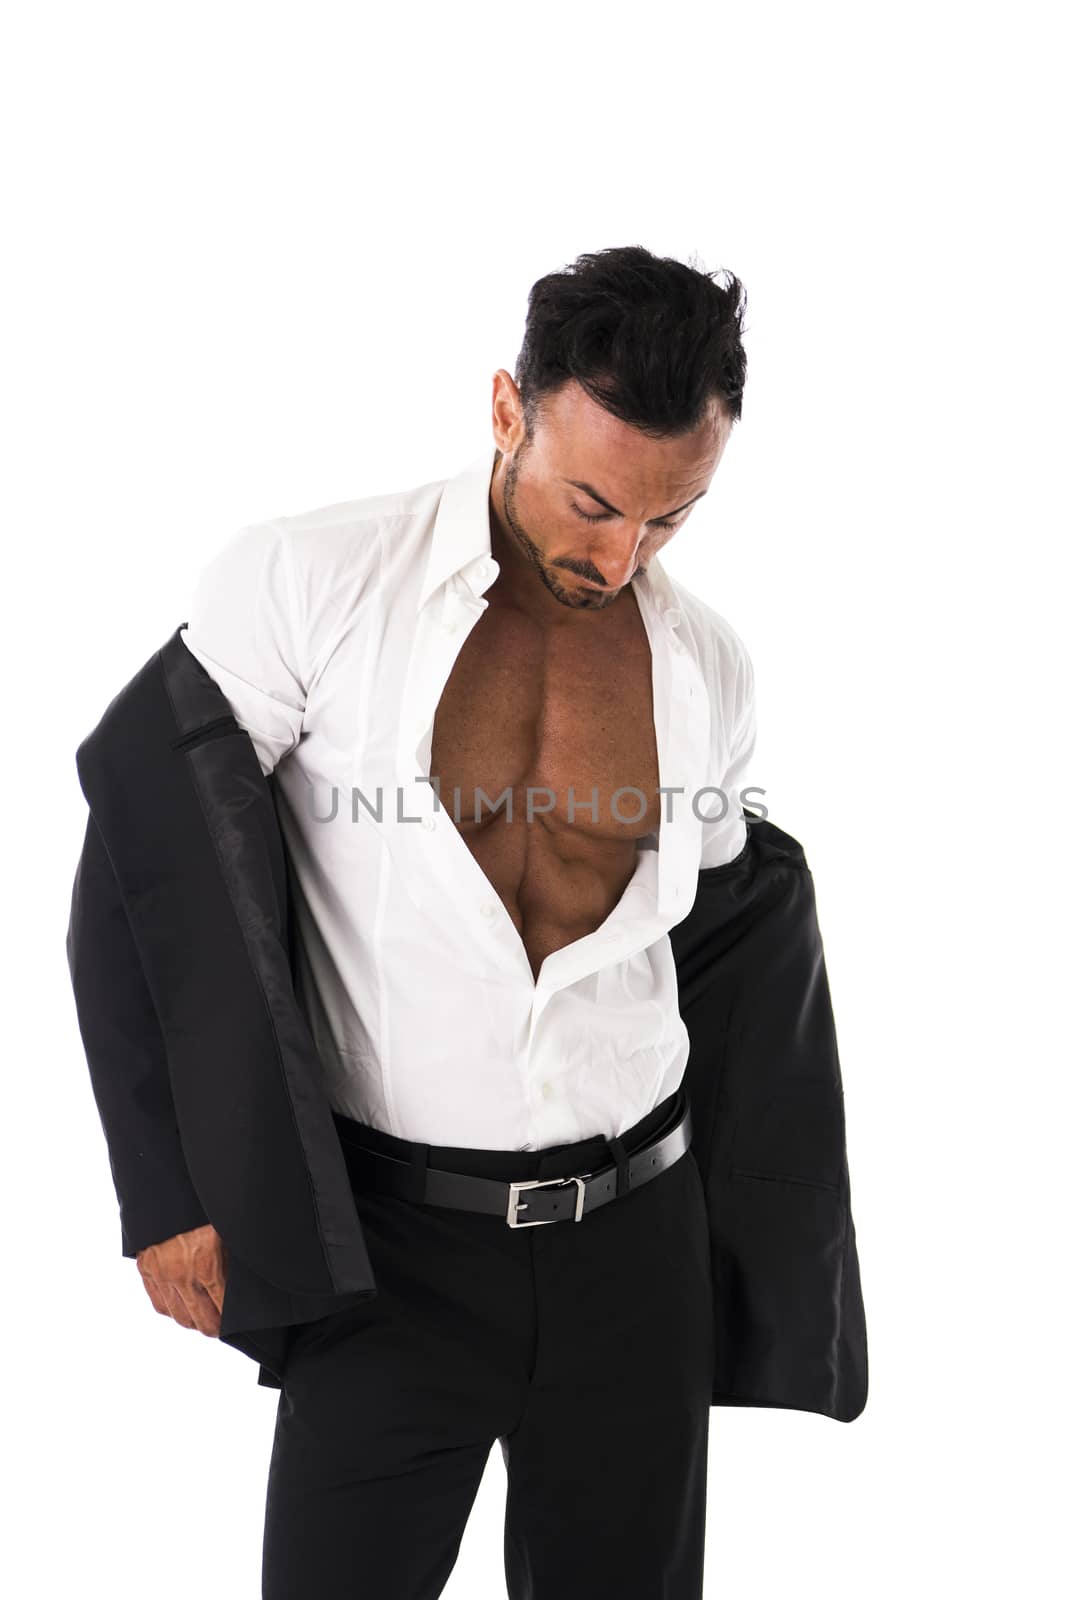 Businessman opening his shirt revealing muscular torso by artofphoto